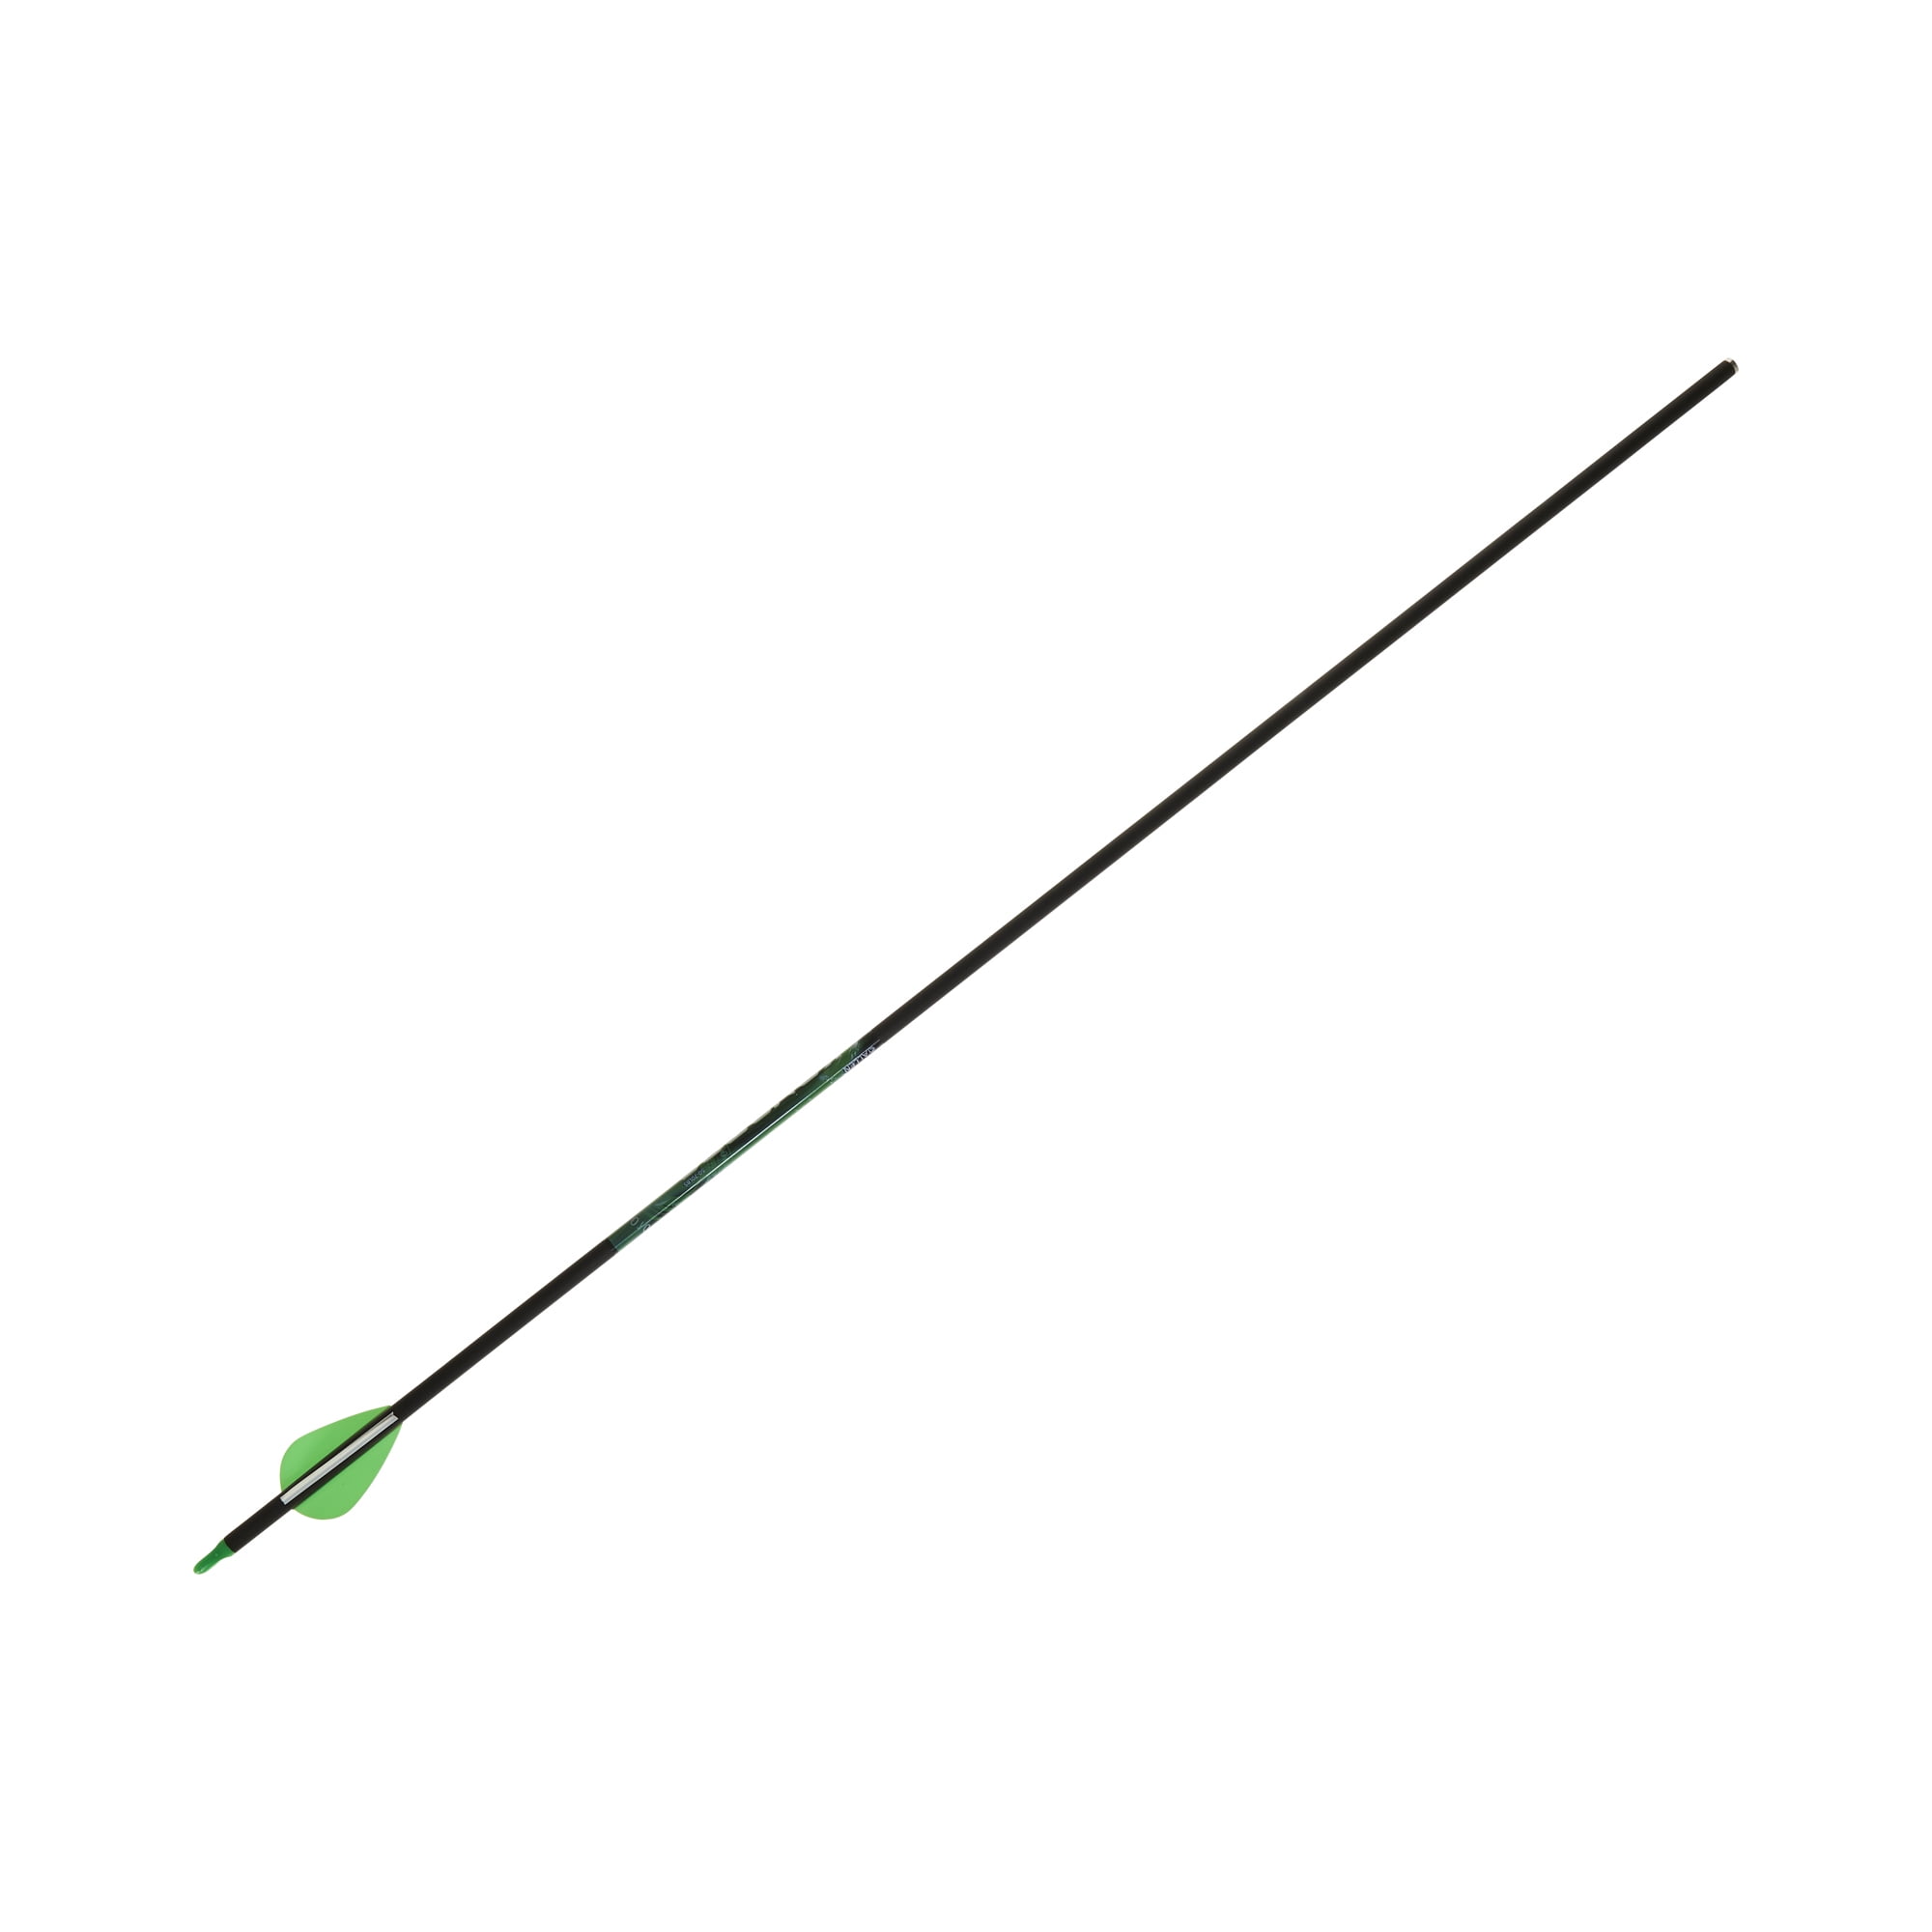 12 Archery Fiber Arrows Targets Shooting Practice 26" 28" 30" 1 Quiver Side Bag 